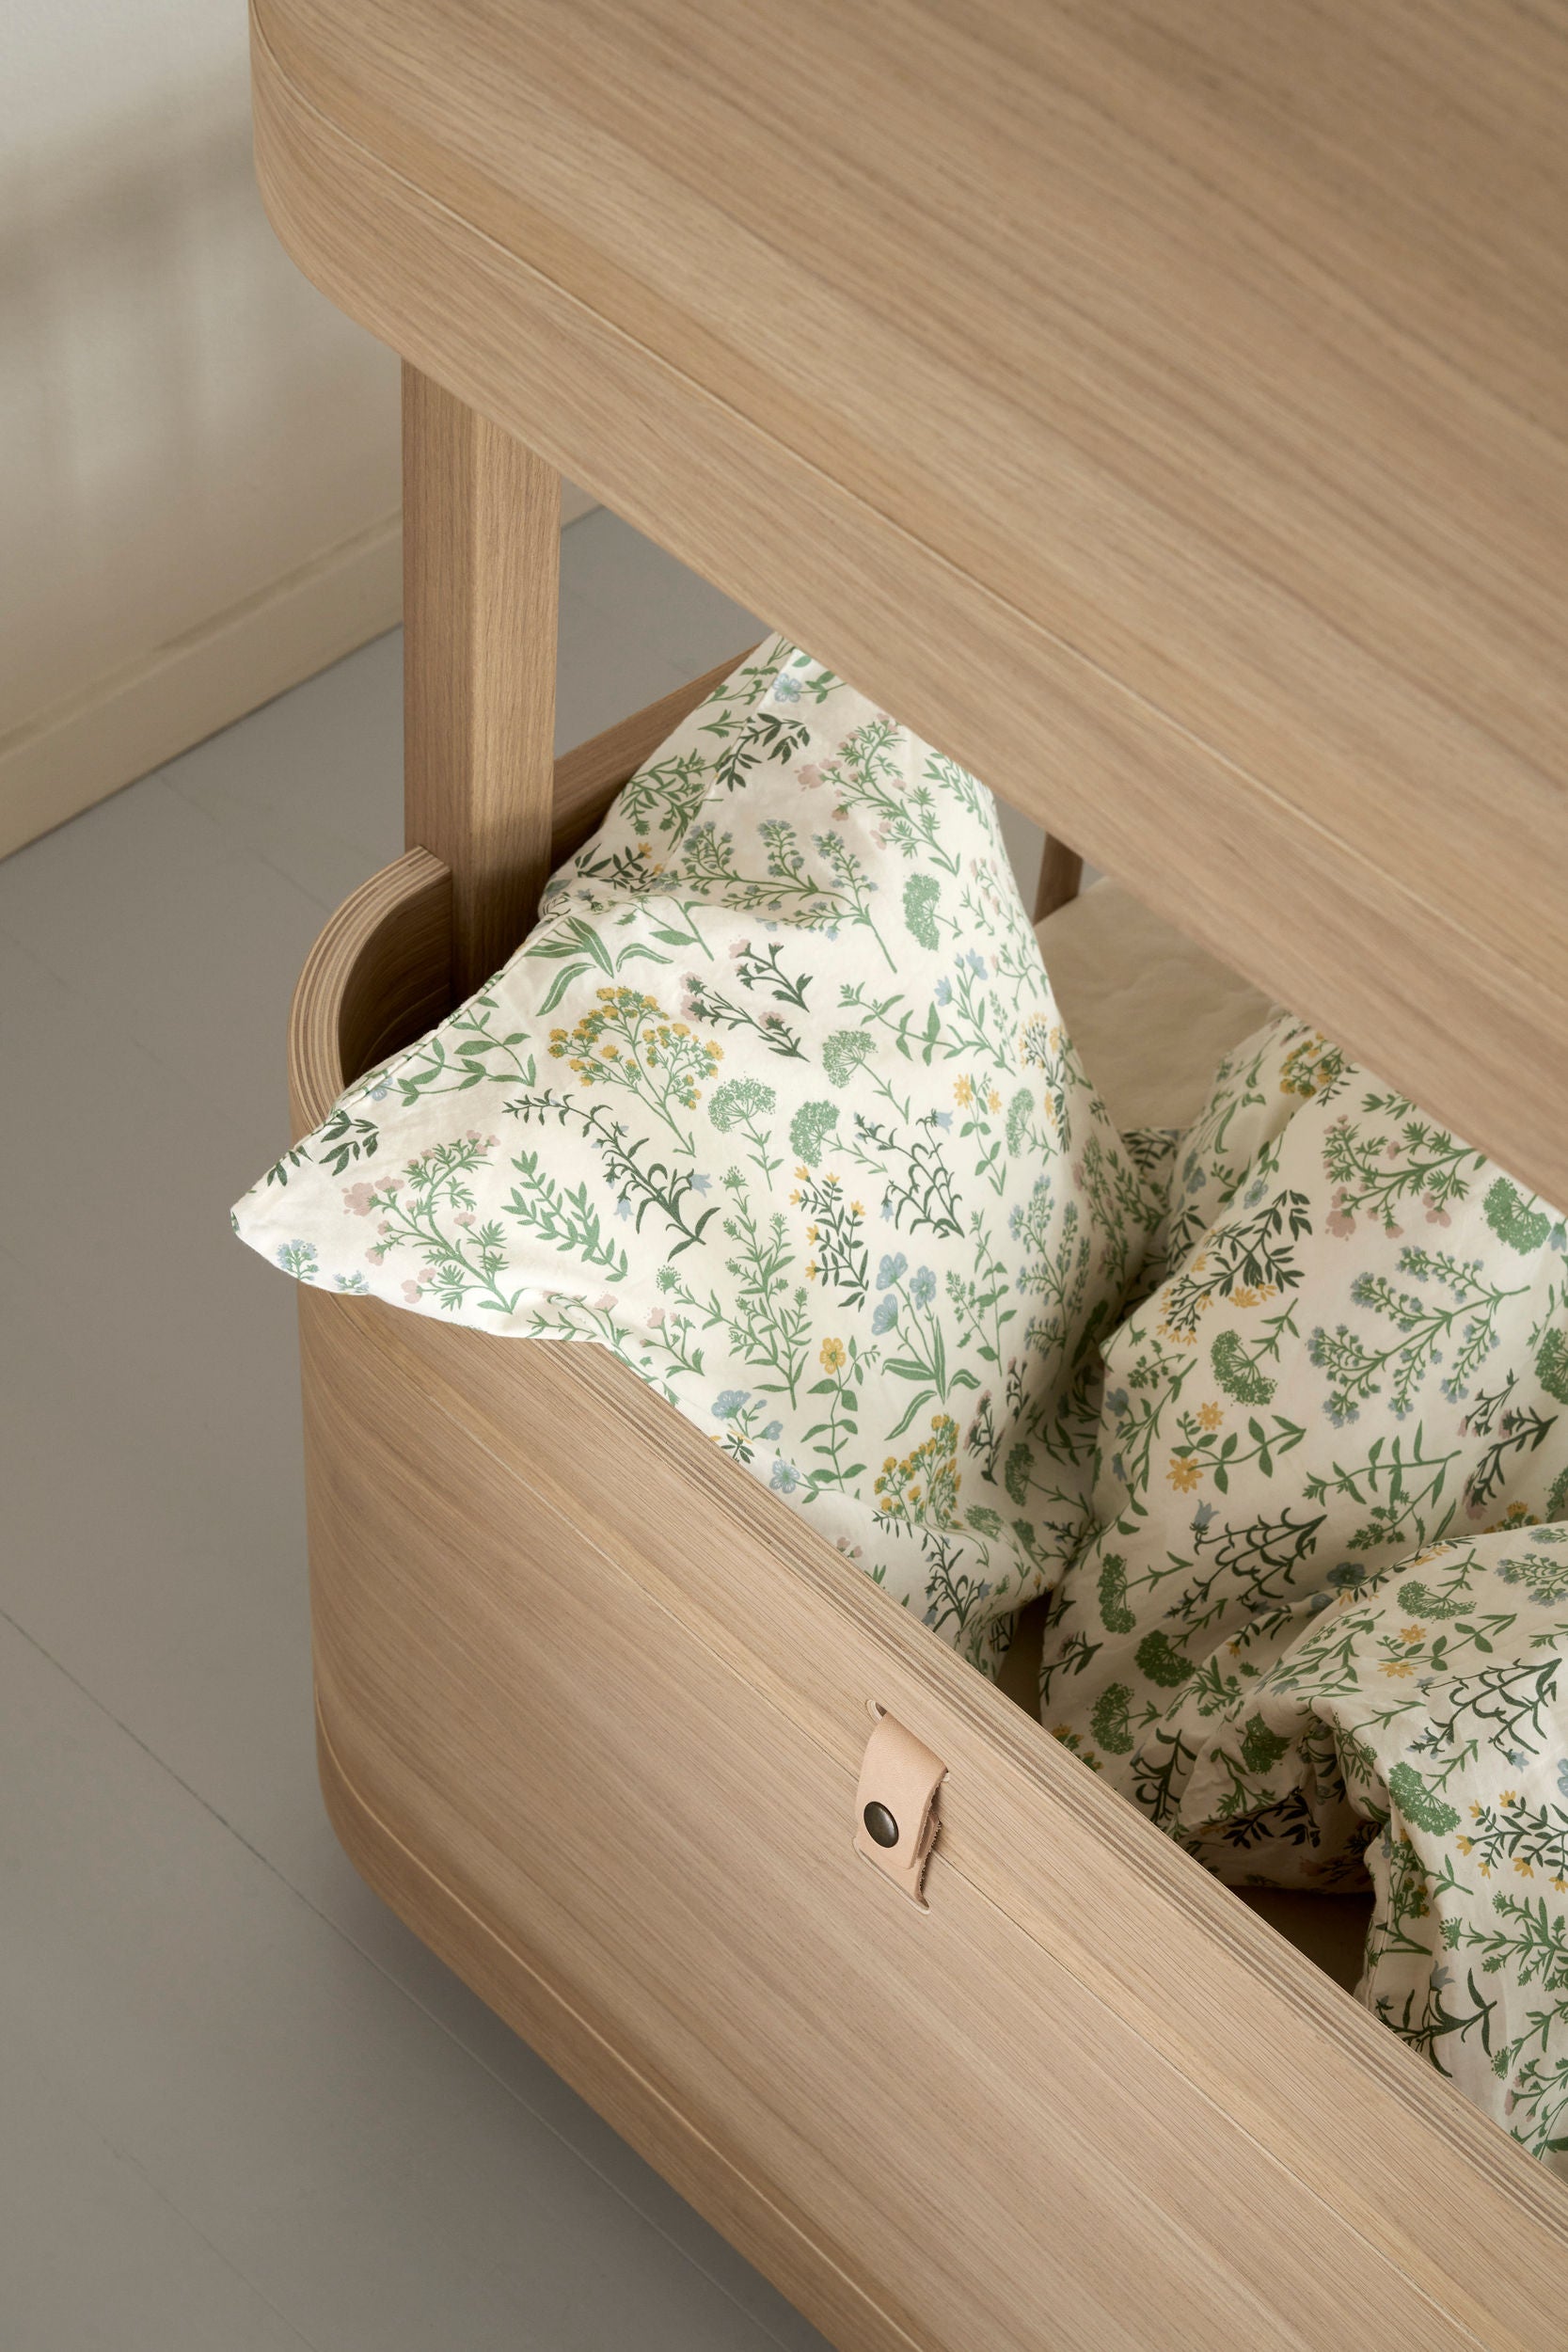 Junior Wood Mini+ Bed, Oak